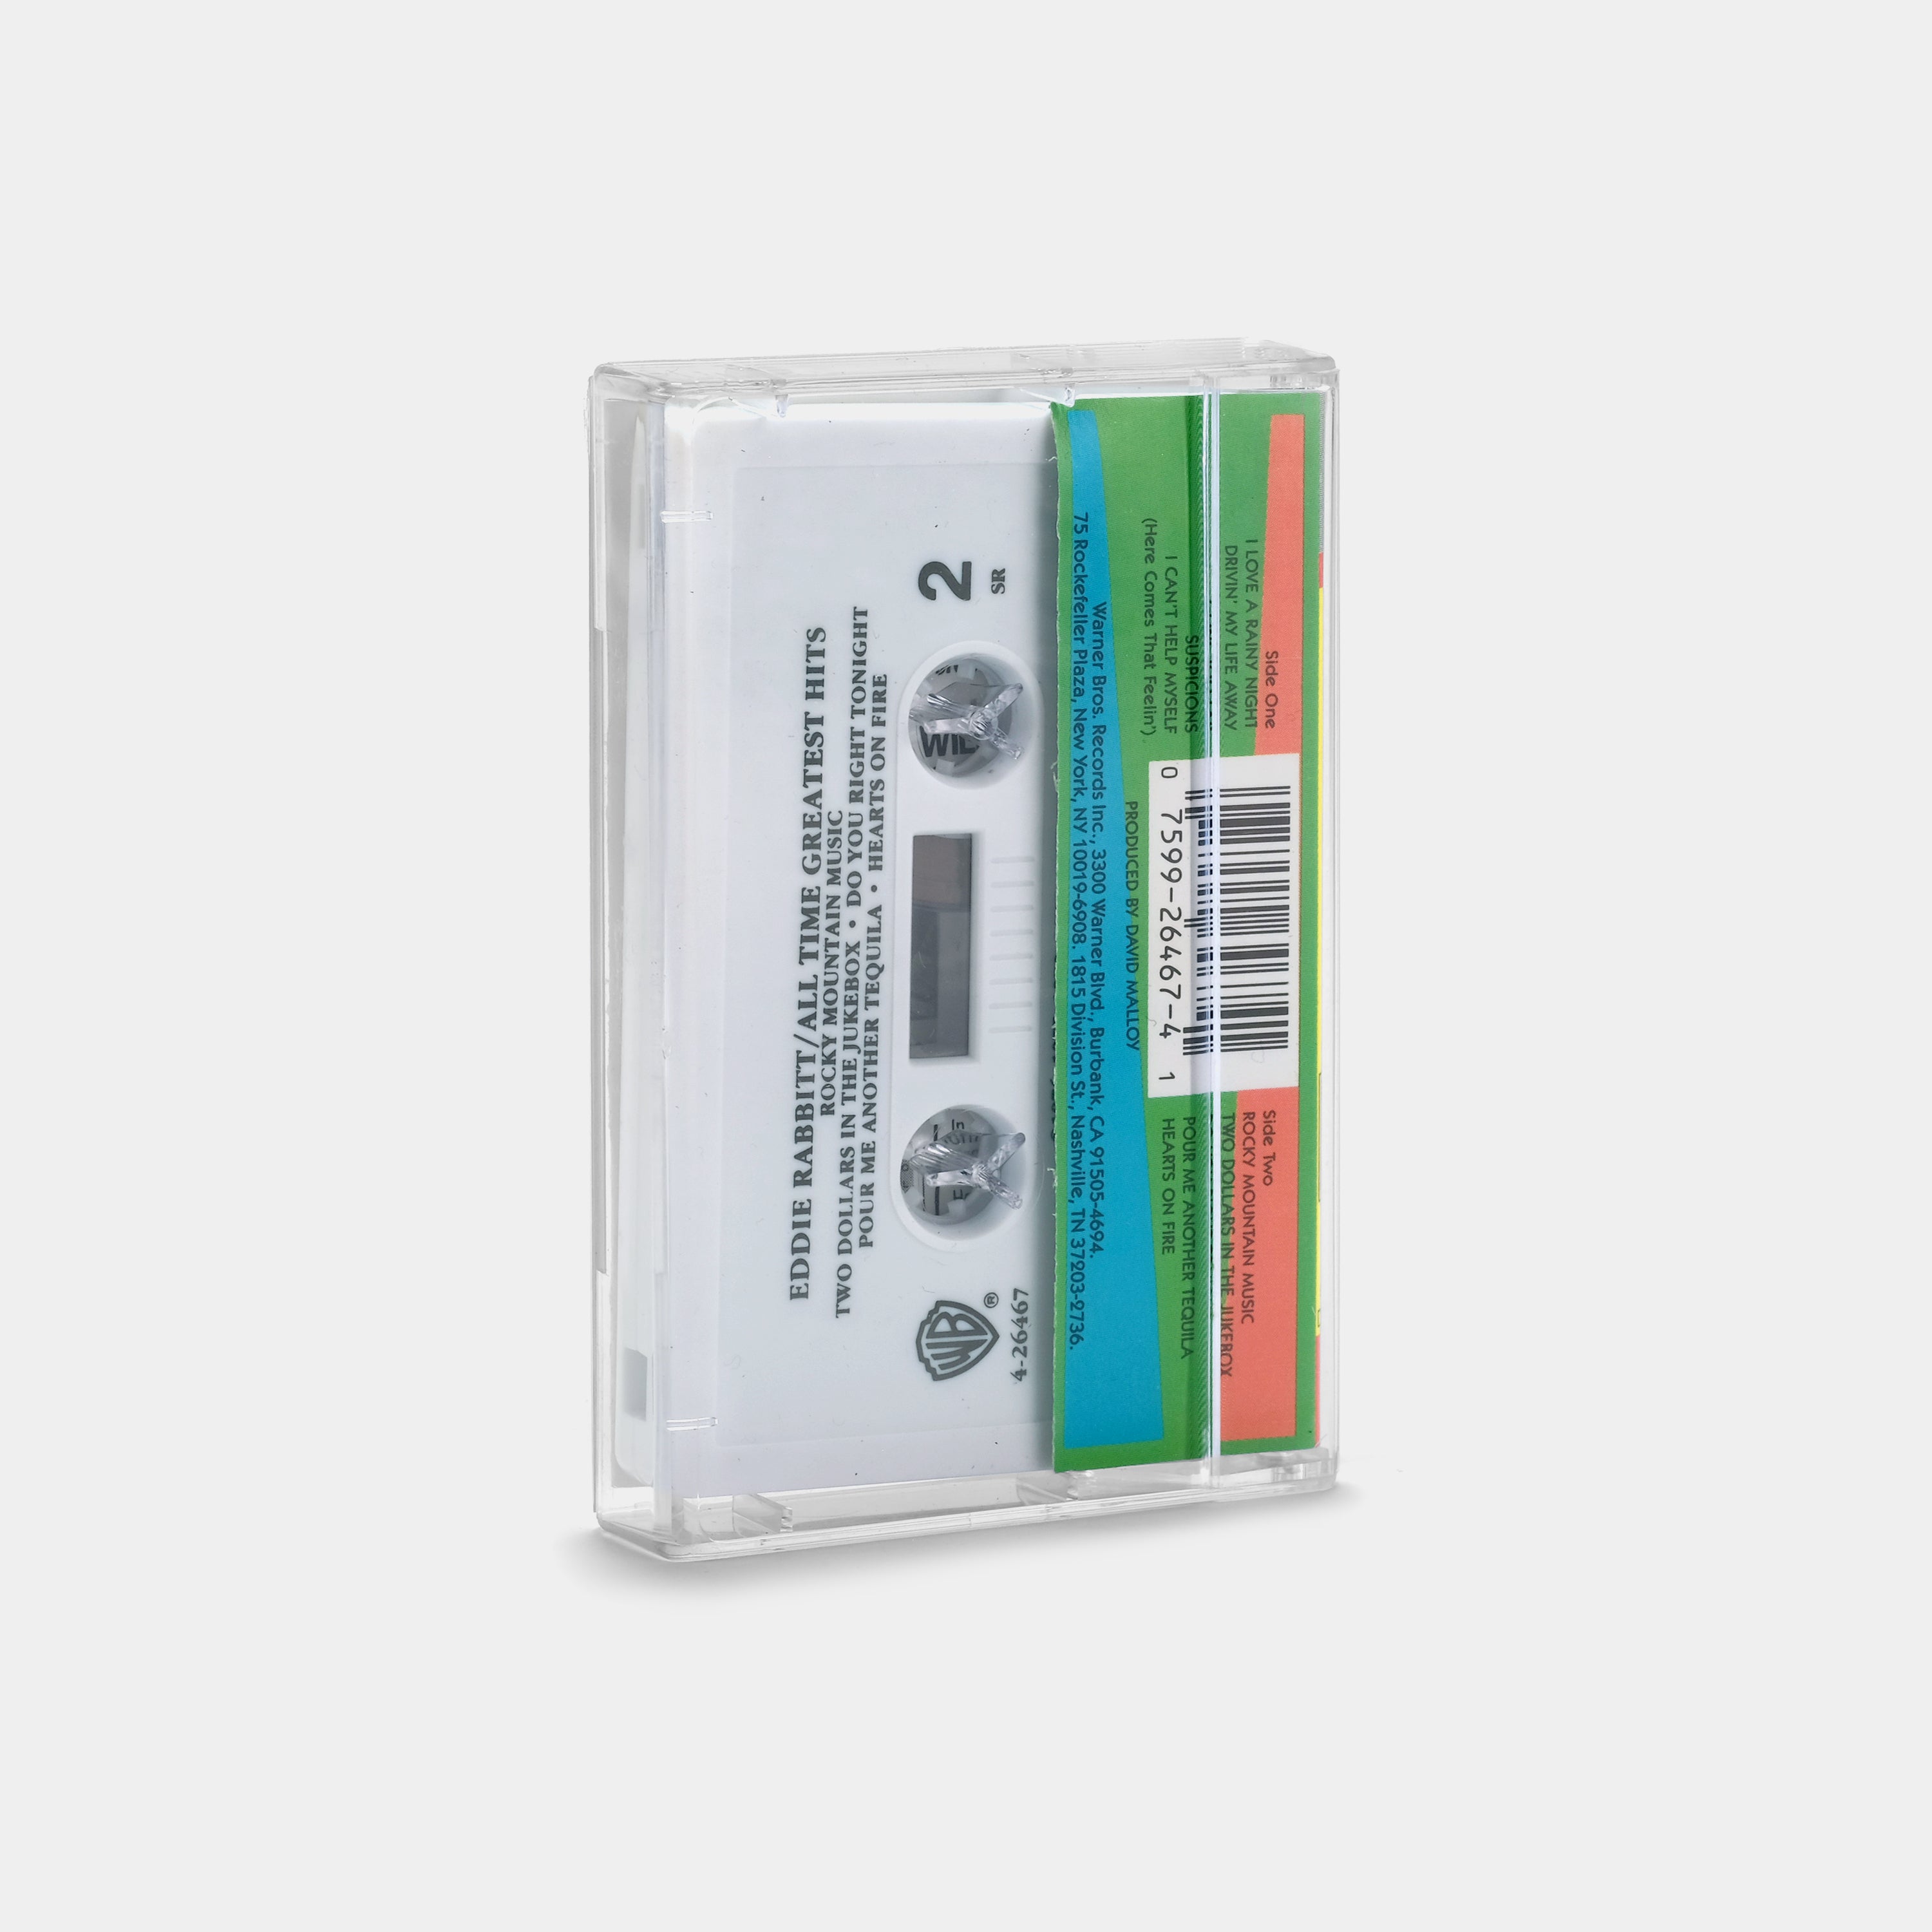 Eddie Rabbitt - Eddie Rabbitt's Greatest Hits Cassette Tape